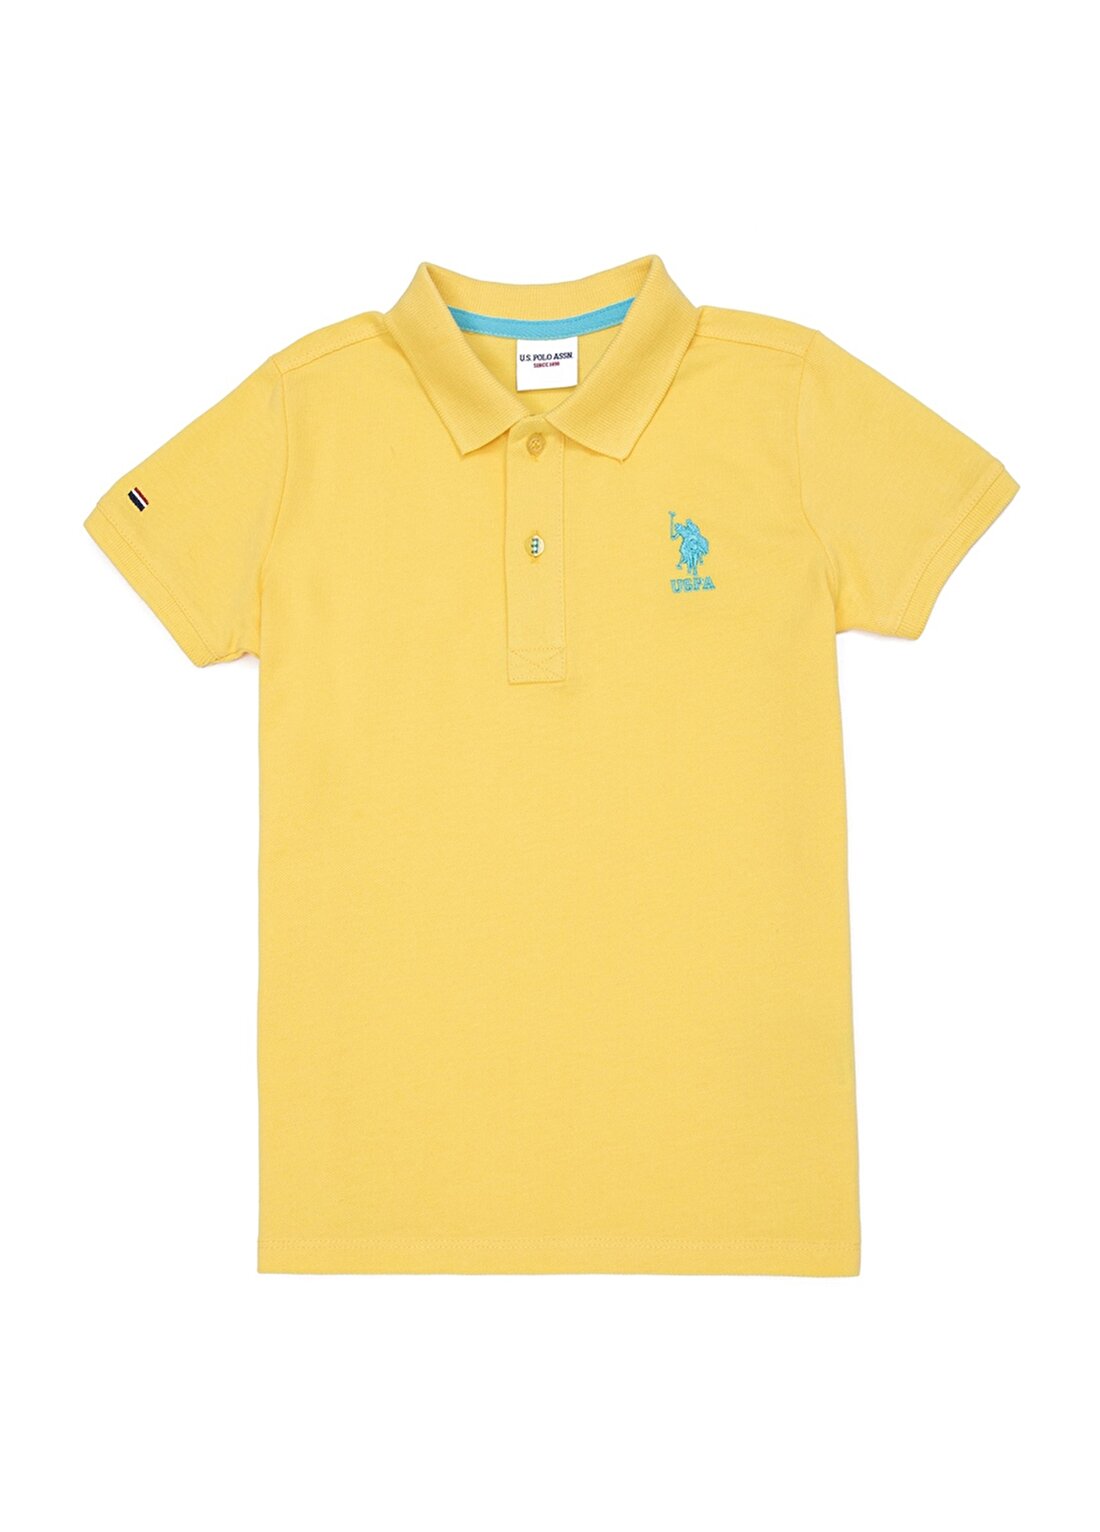 U.S. Polo Assn. Düz Sarı Erkek Çocuk Polo T-Shirt TP01IY022 -KIDS